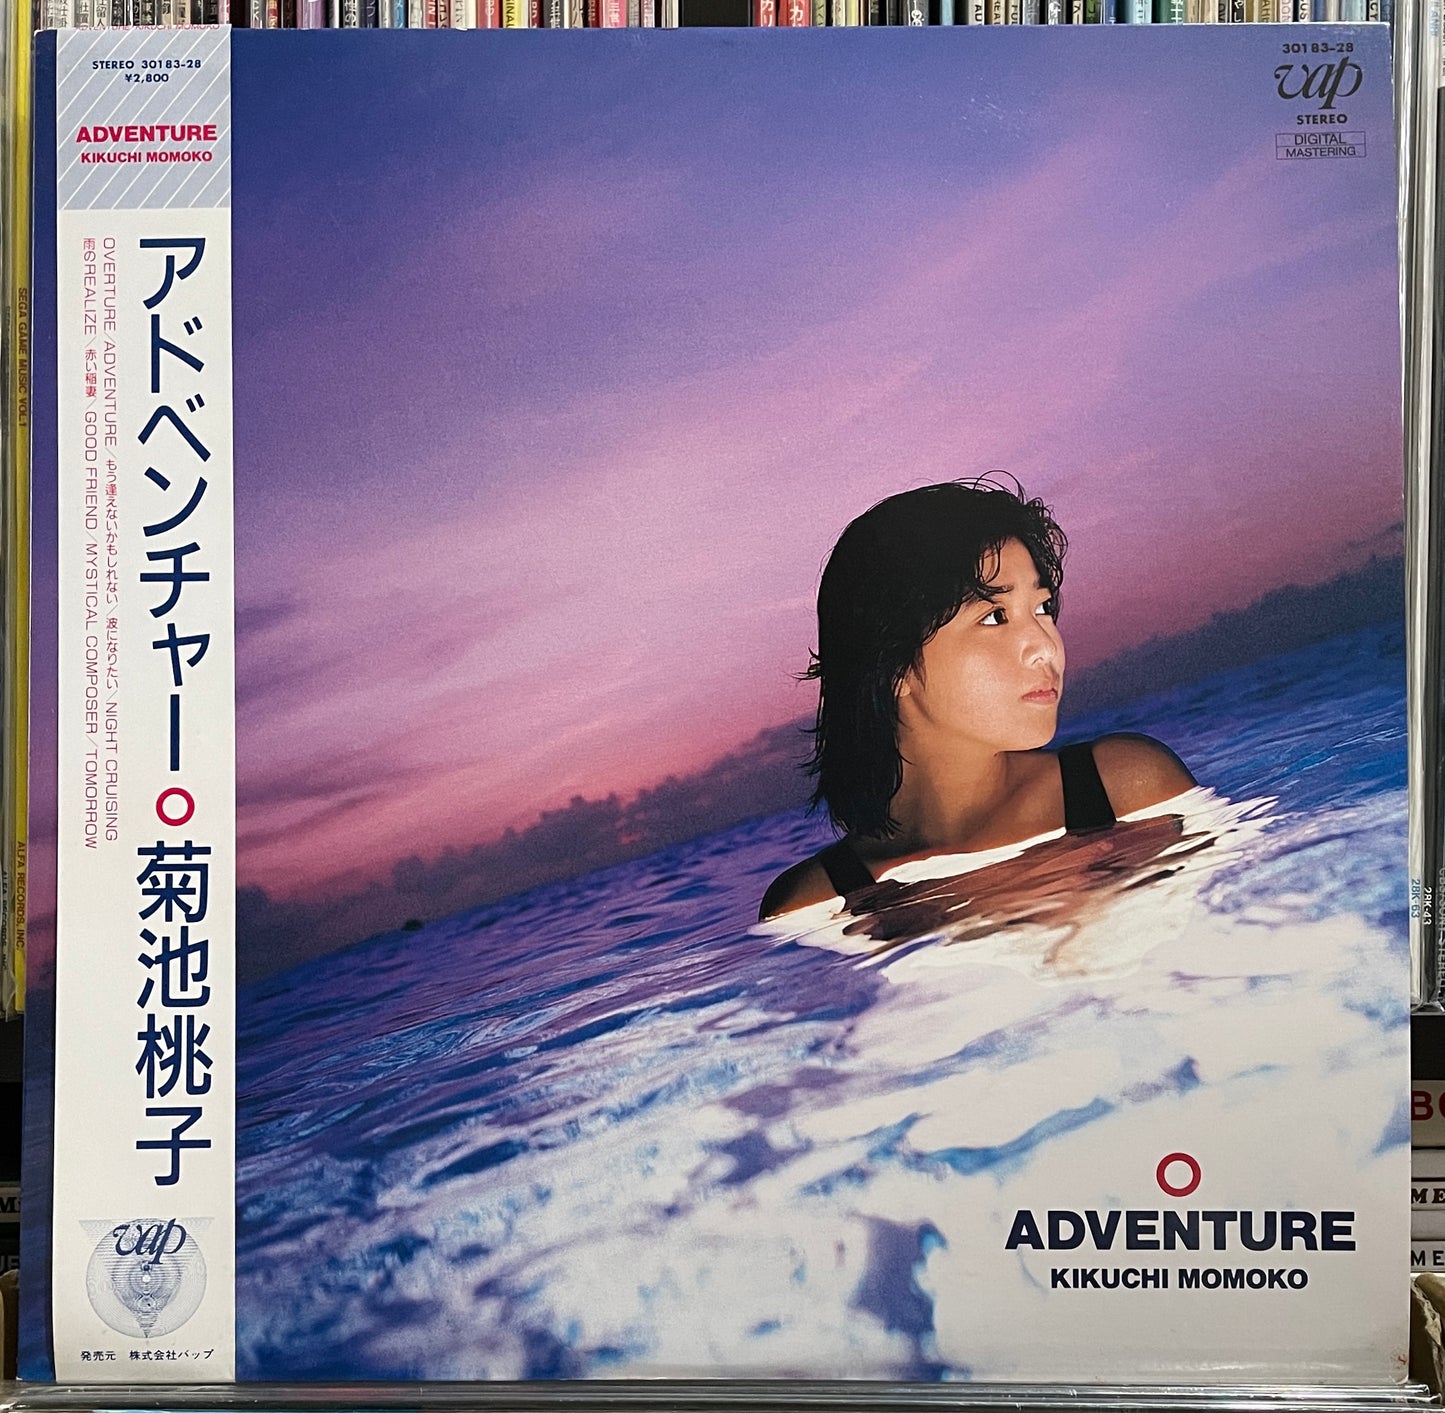 Momoko Kikuchi “Adventure” (1986)